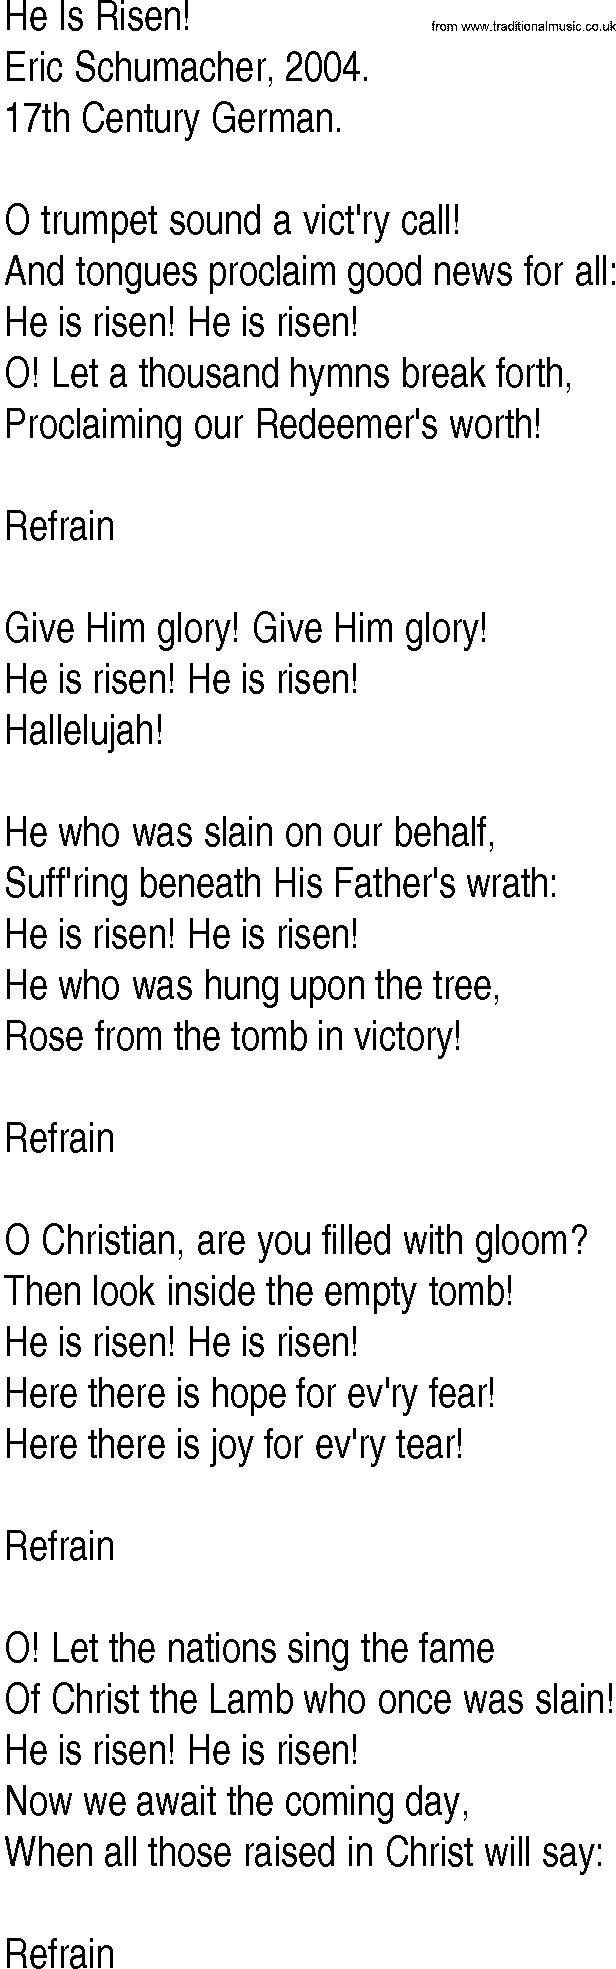 Hymn and Gospel Song: He Is Risen! by Eric Schumacher lyrics